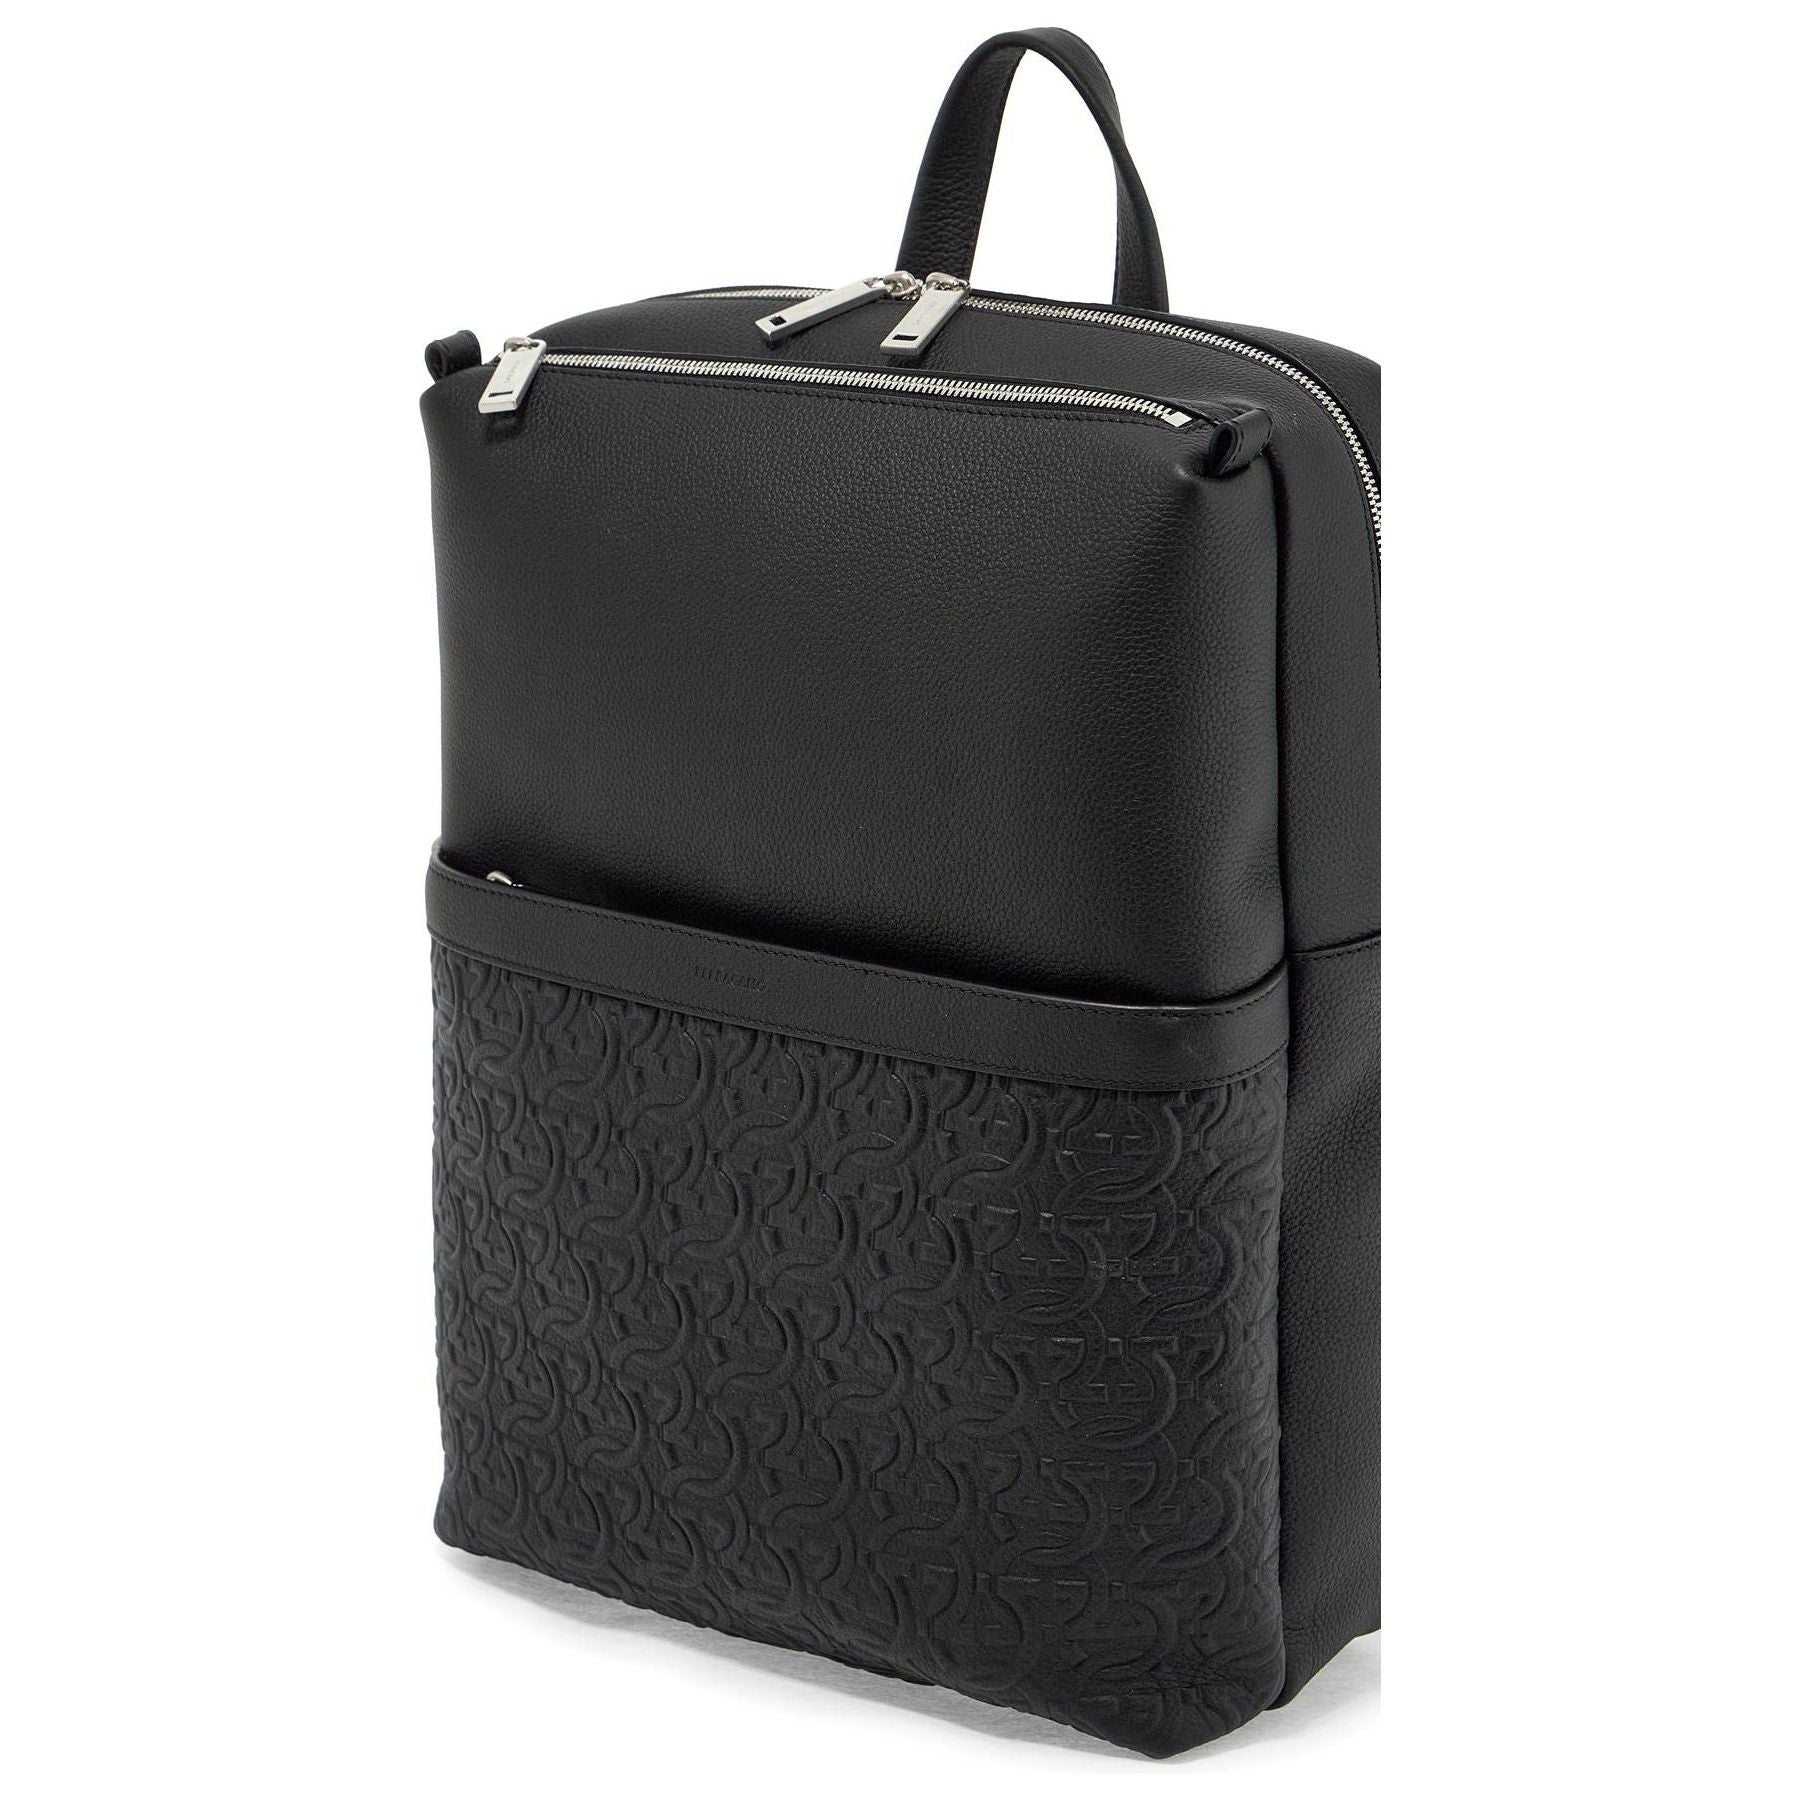 Gancini Embossed Leather Backpack